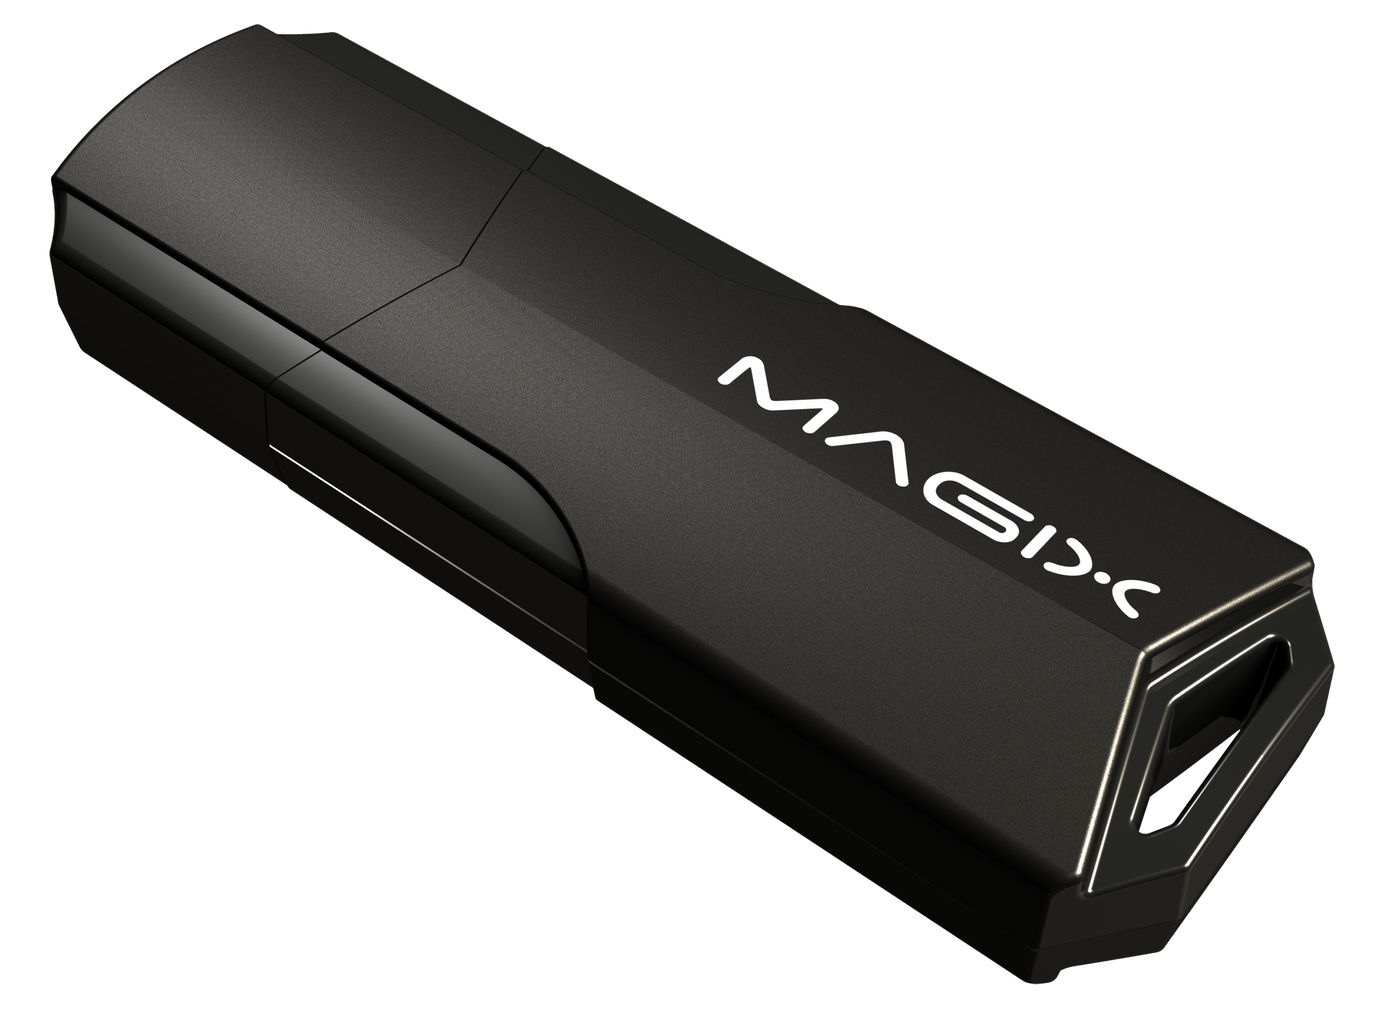 MAGIX BlackBird USB Flash 3.2 Gen. 2.1